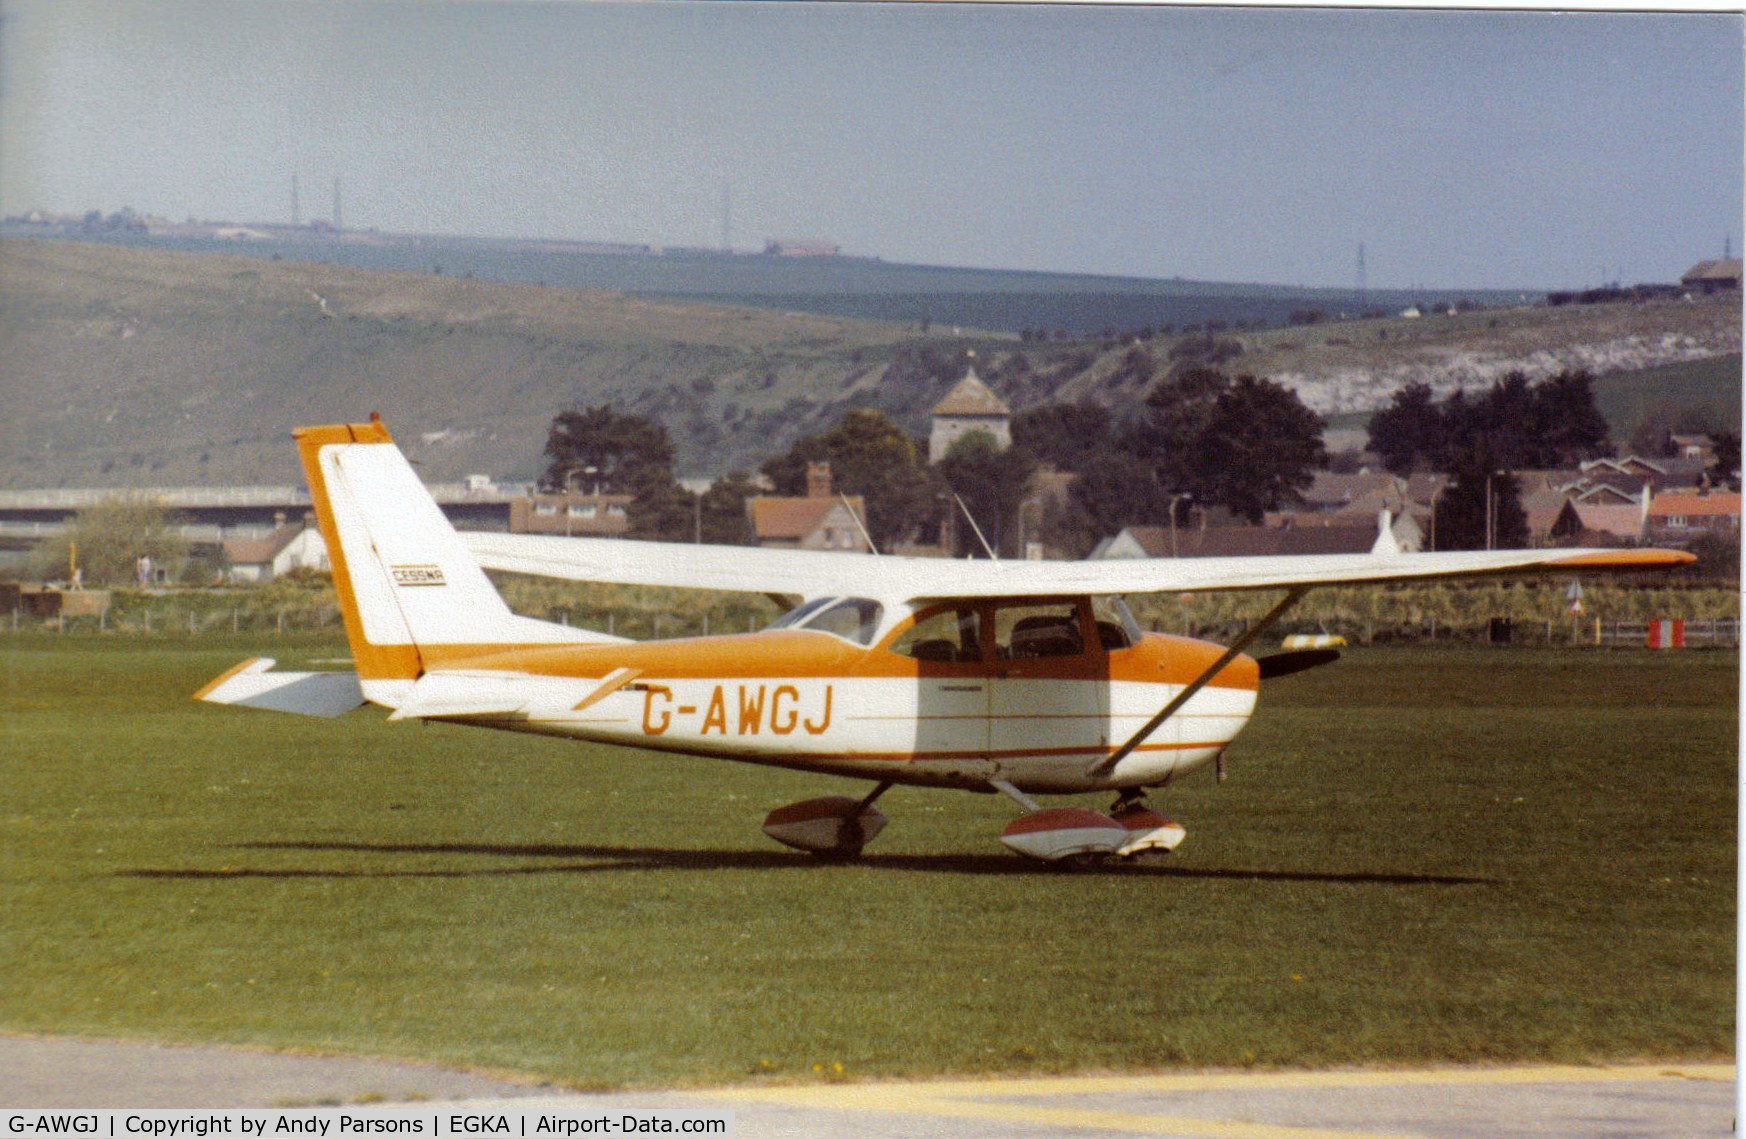 G-AWGJ, 1968 Reims F172H Skyhawk C/N 0531, Taken in the late 70s at |Shoreham (scanned print)